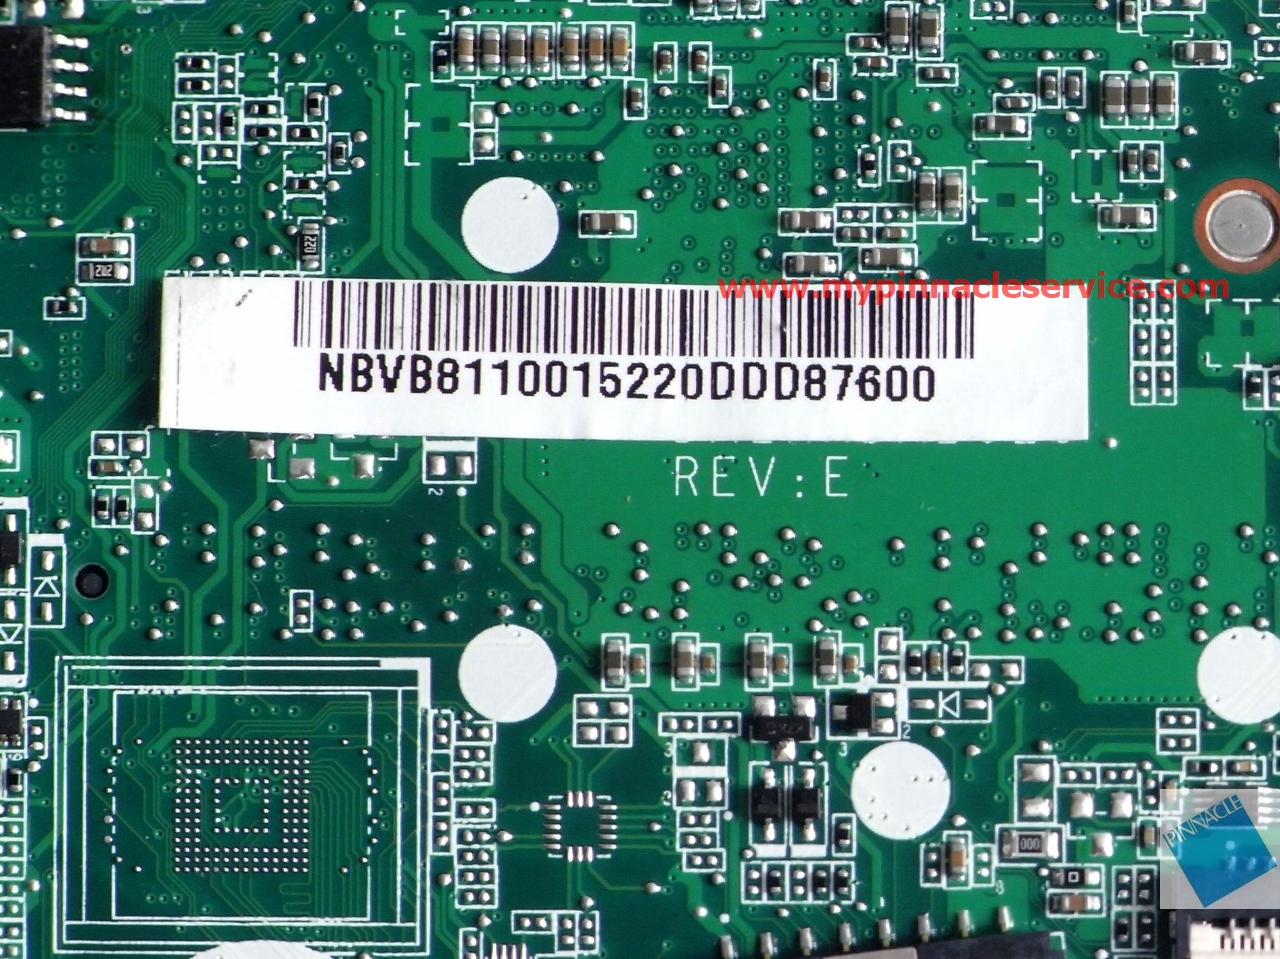 nbvb811001-motherboard-for-acer-aspire-es1-131-travelmate-b116-n3050-cpu-dazhkdmb6e0-zhkd-rimg0116.jpg